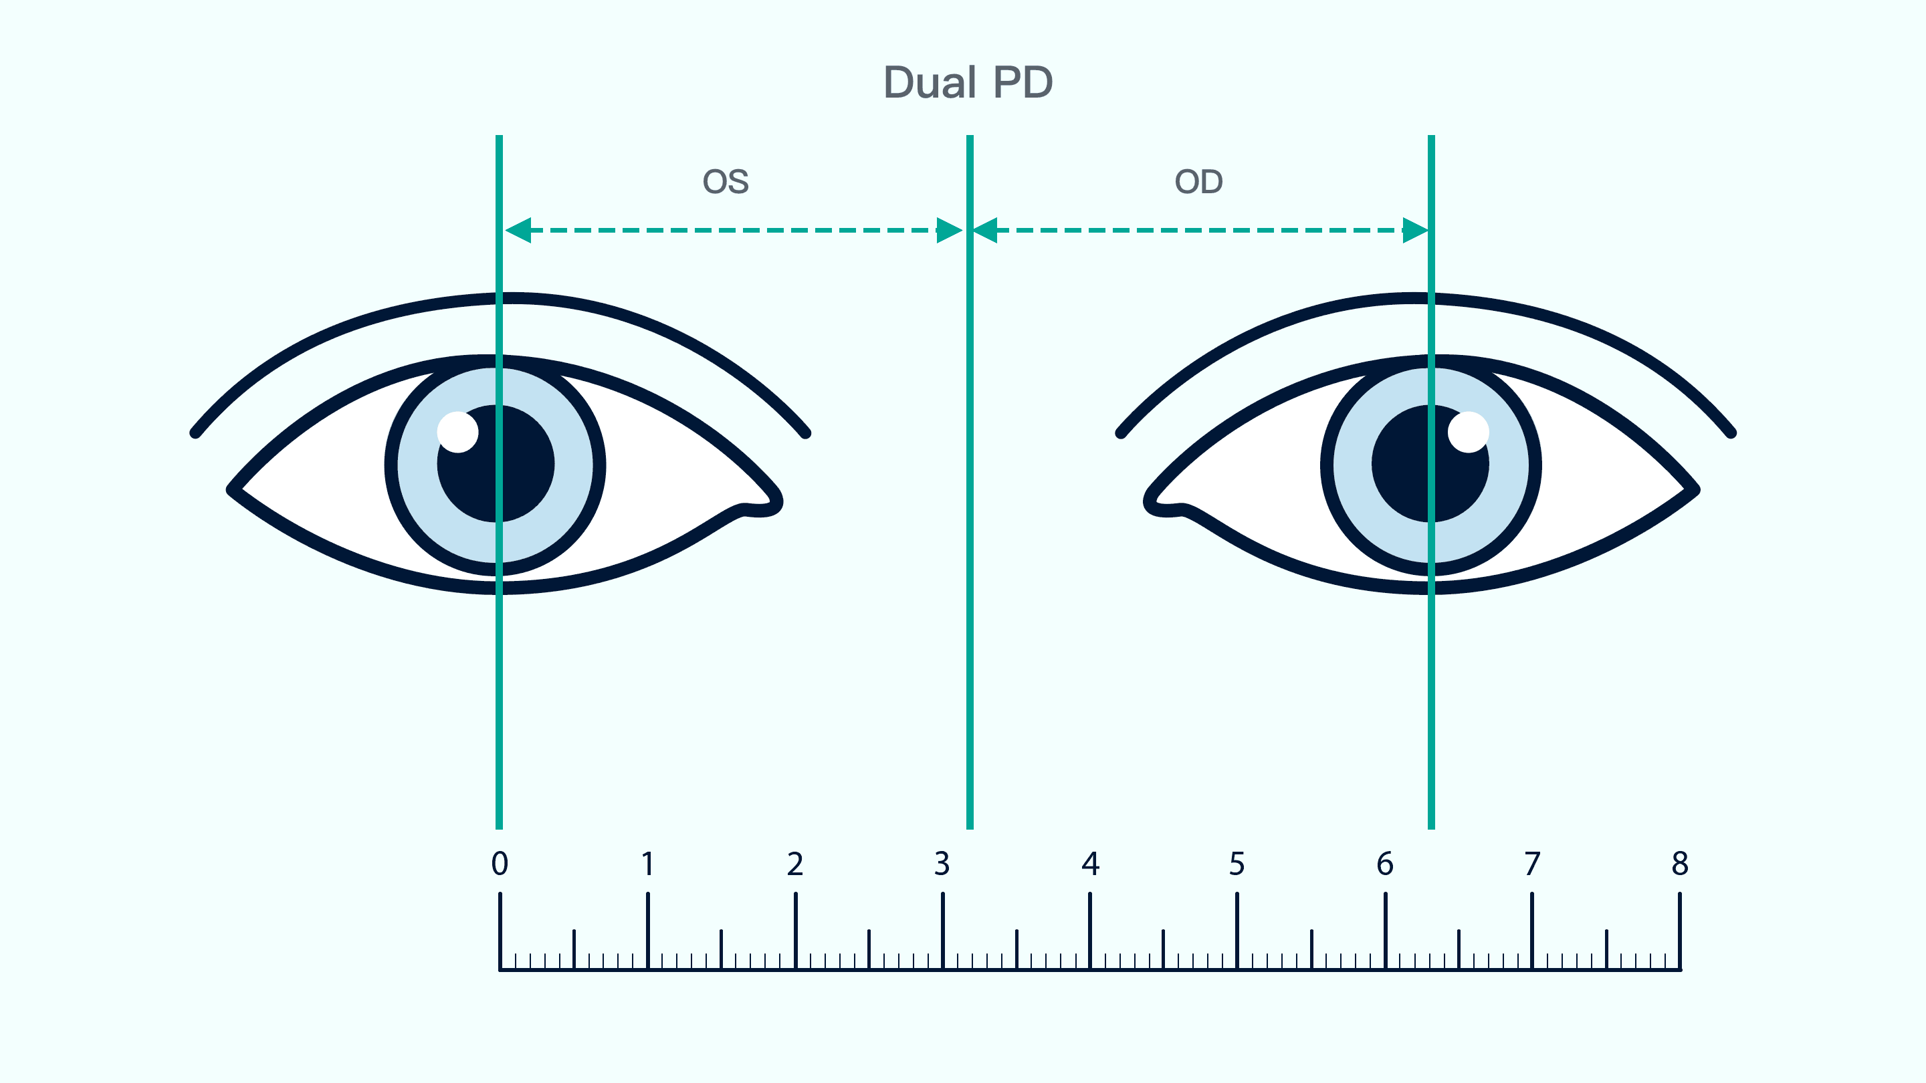 A dual PD measurement